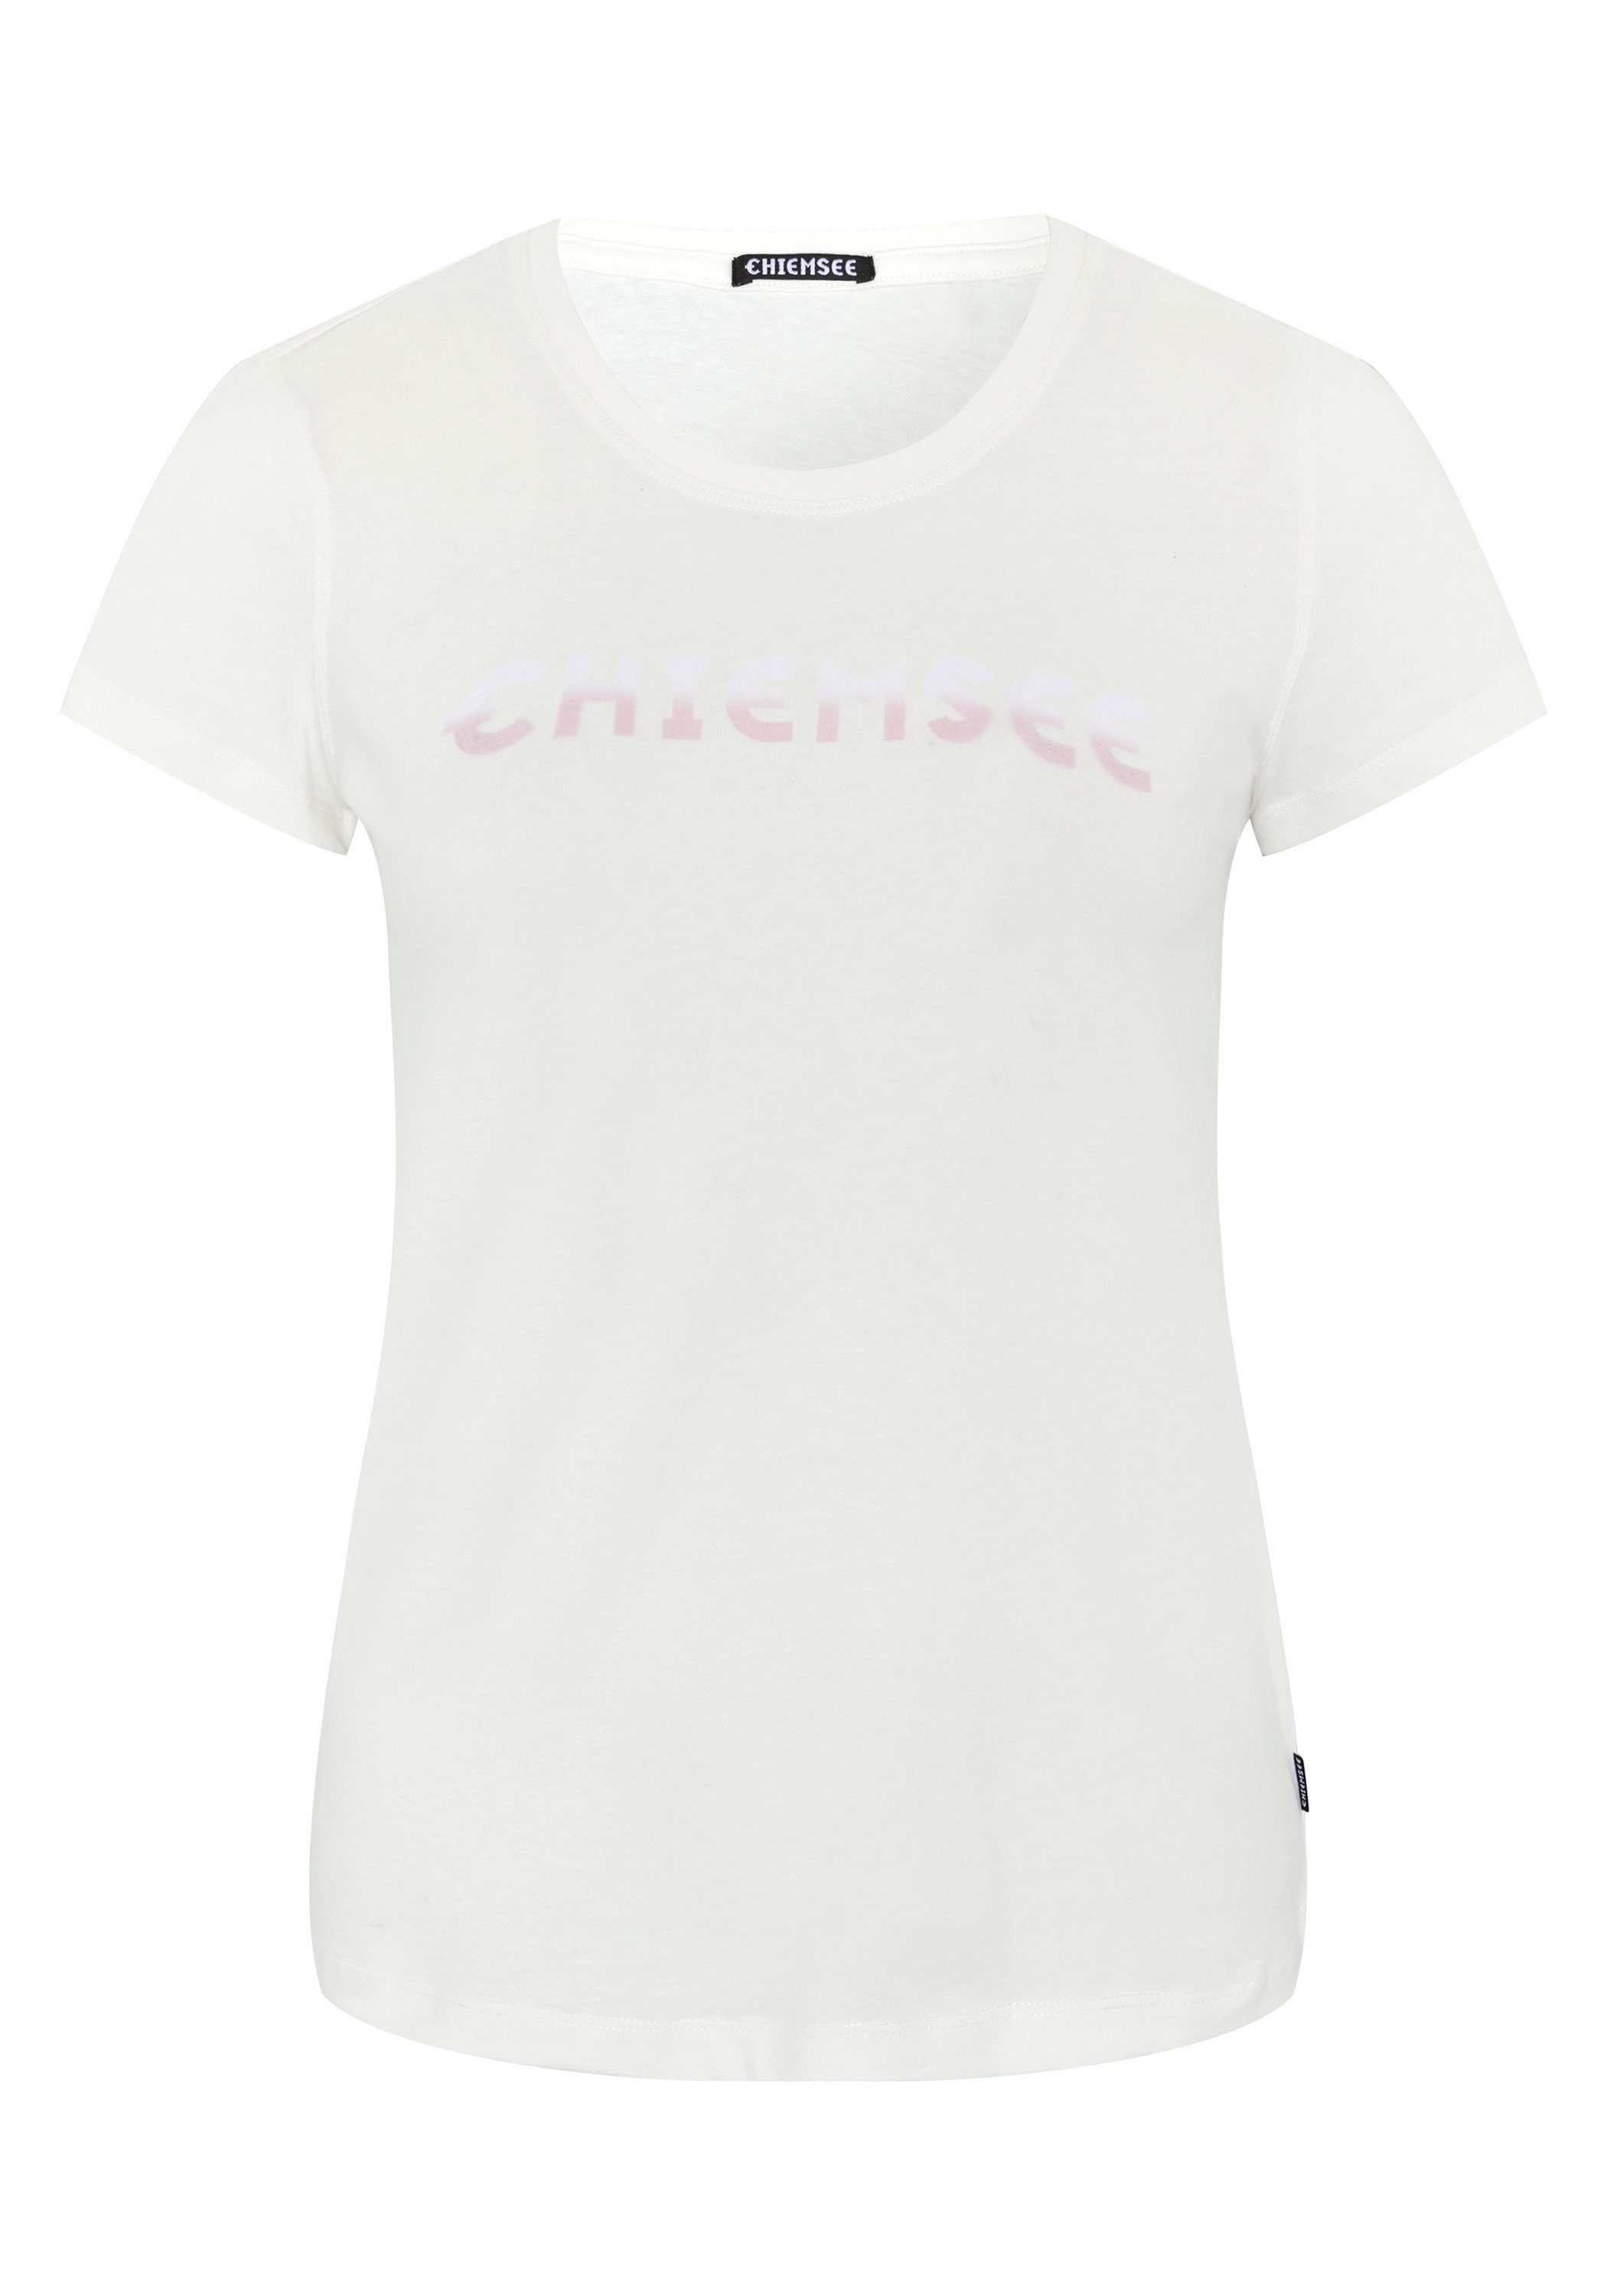 Chiemsee Print-Shirt T-Shirt mit Logo in Farbverlauf-Optik 1 Star White